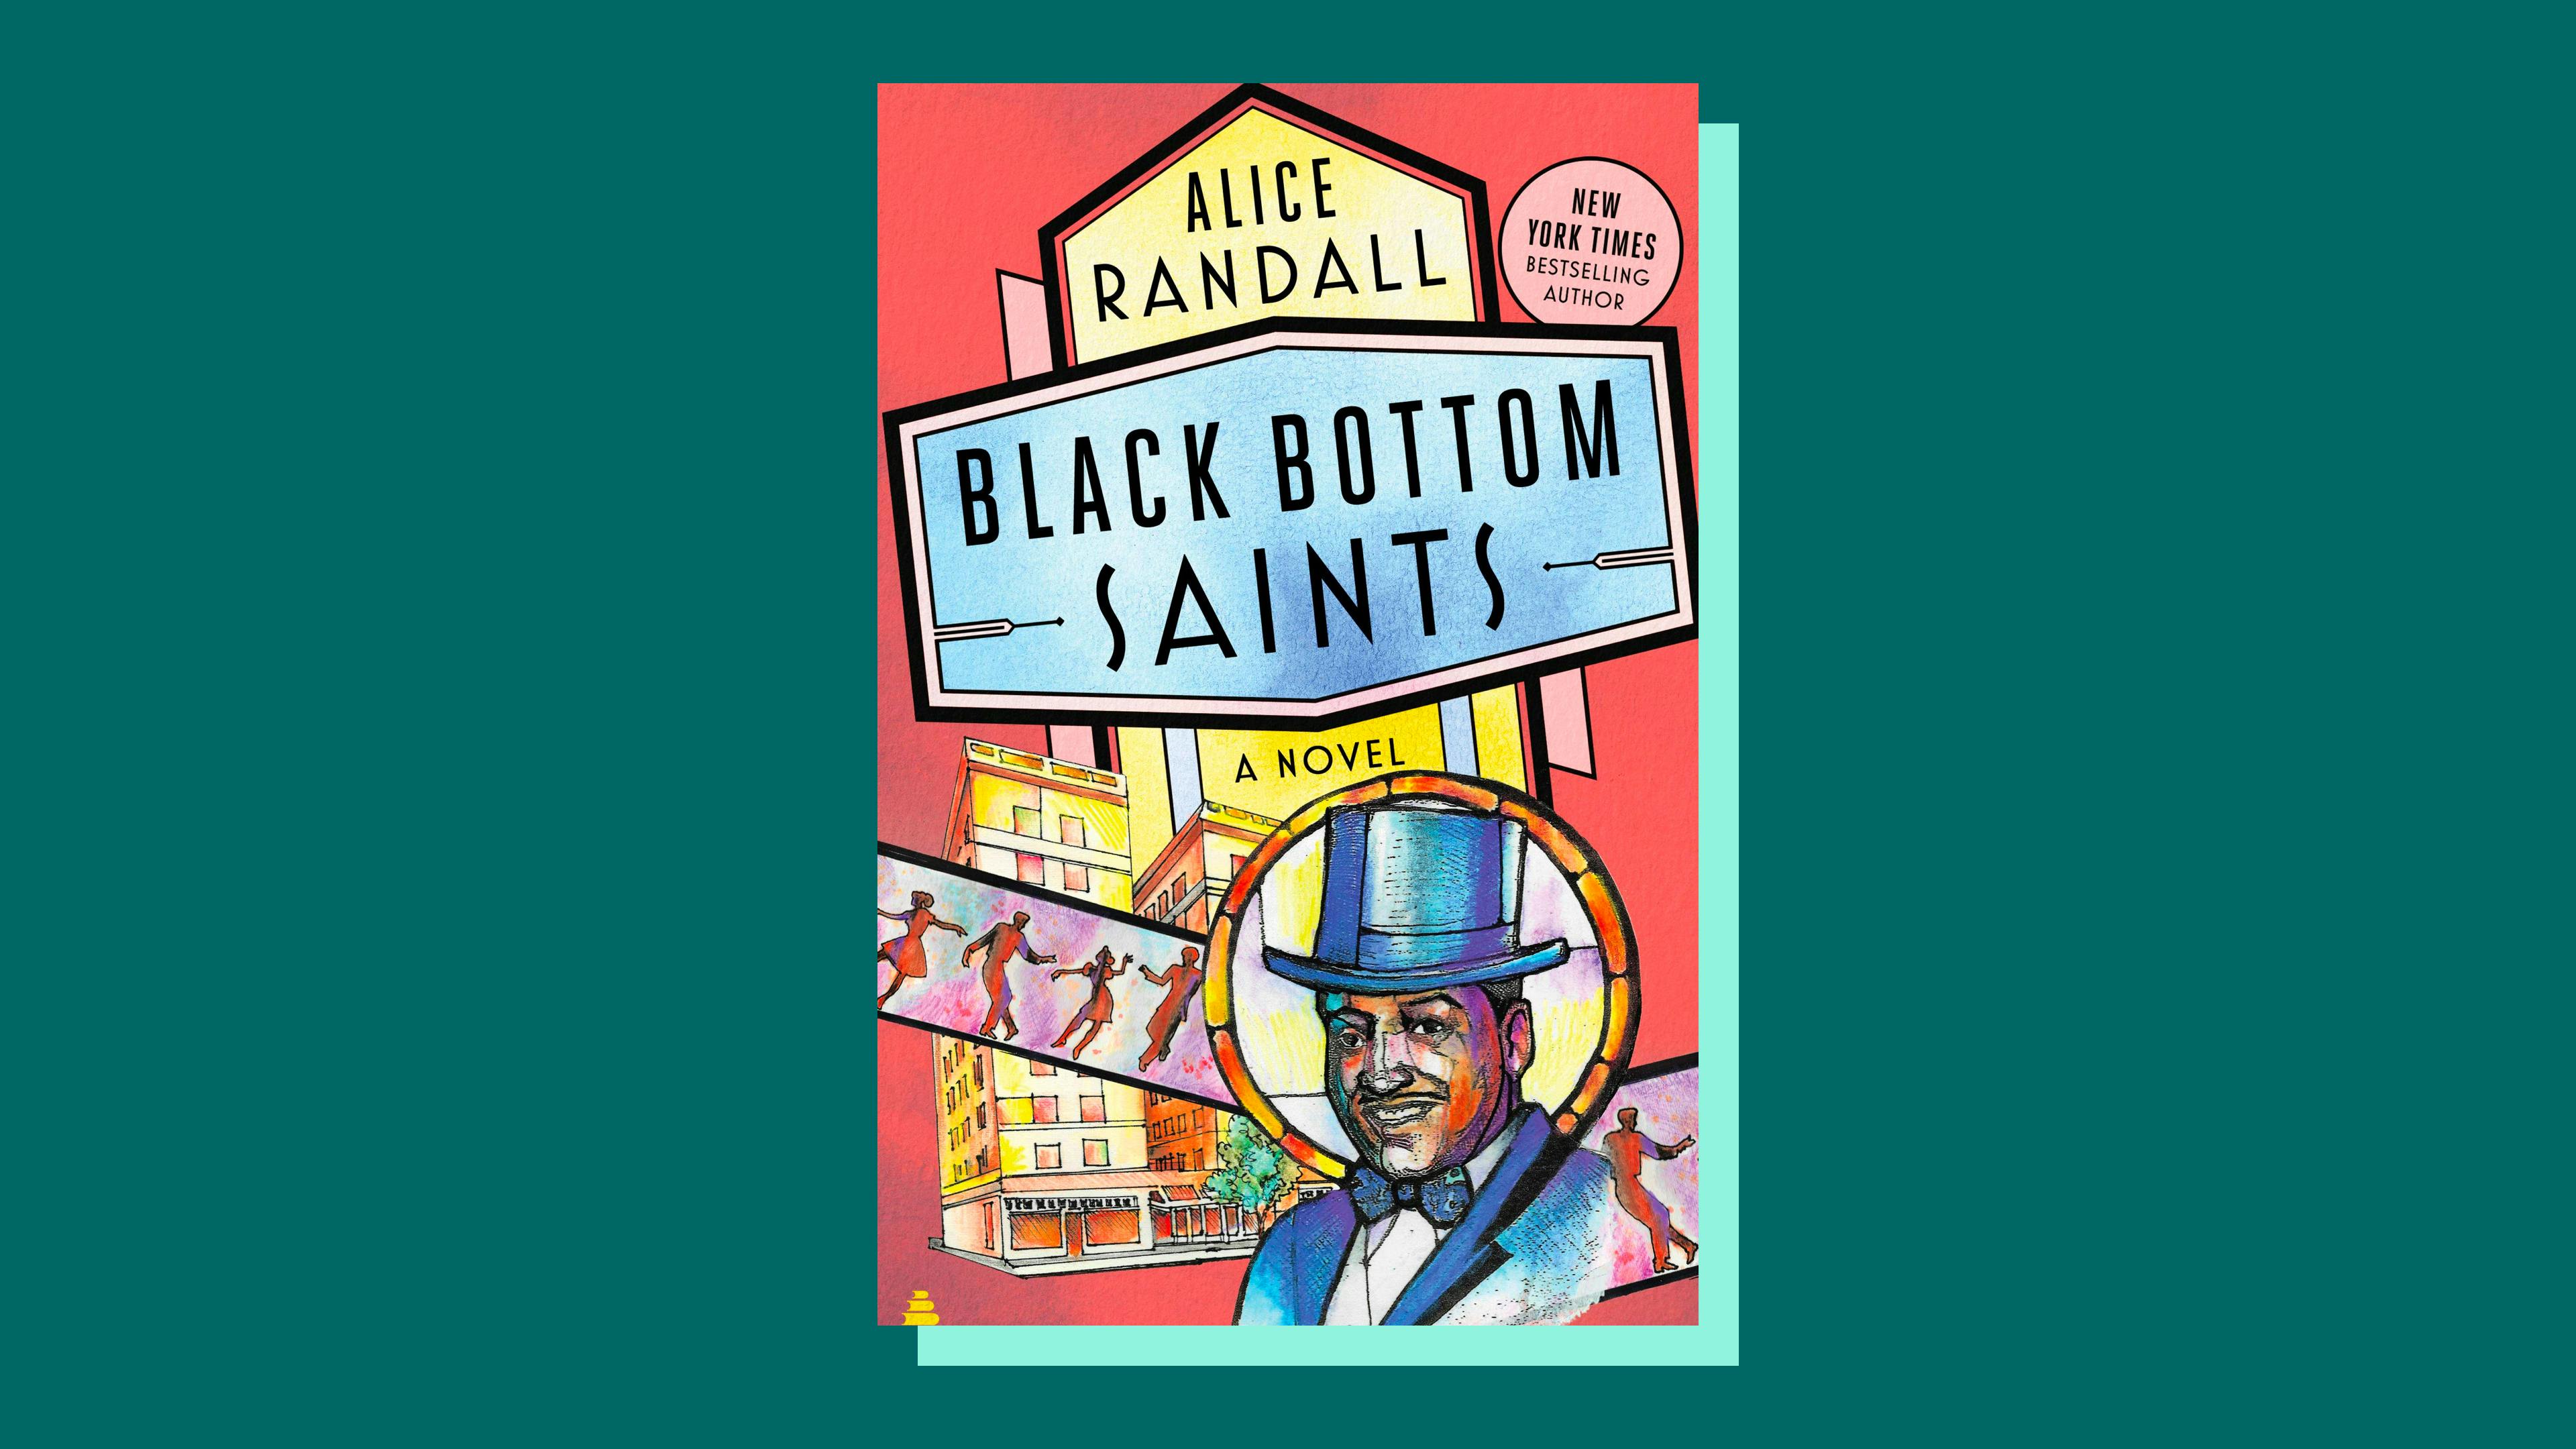 “Black Bottom Saints” by Alice Randall 